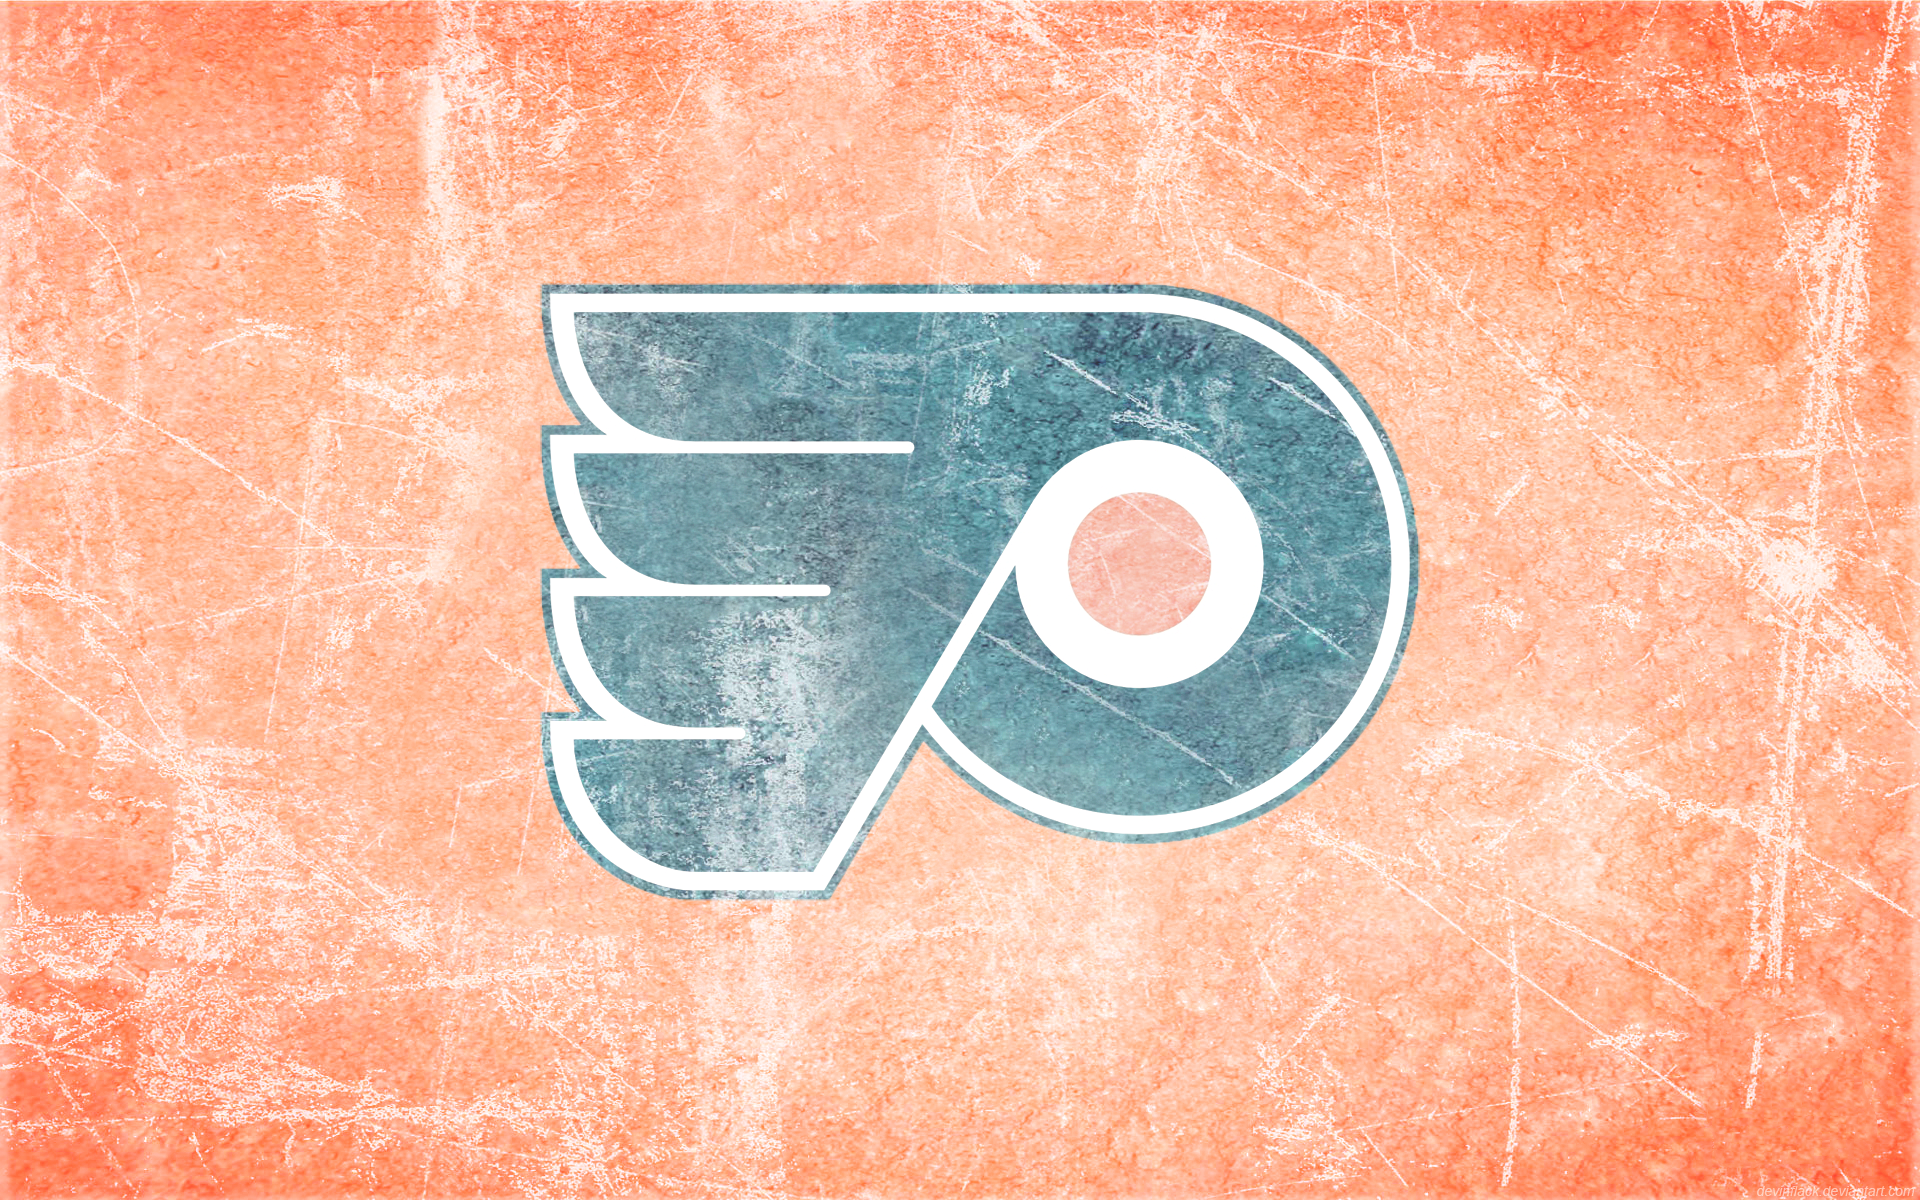 Download Philadelphia Flyers Black Logo Wallpaper